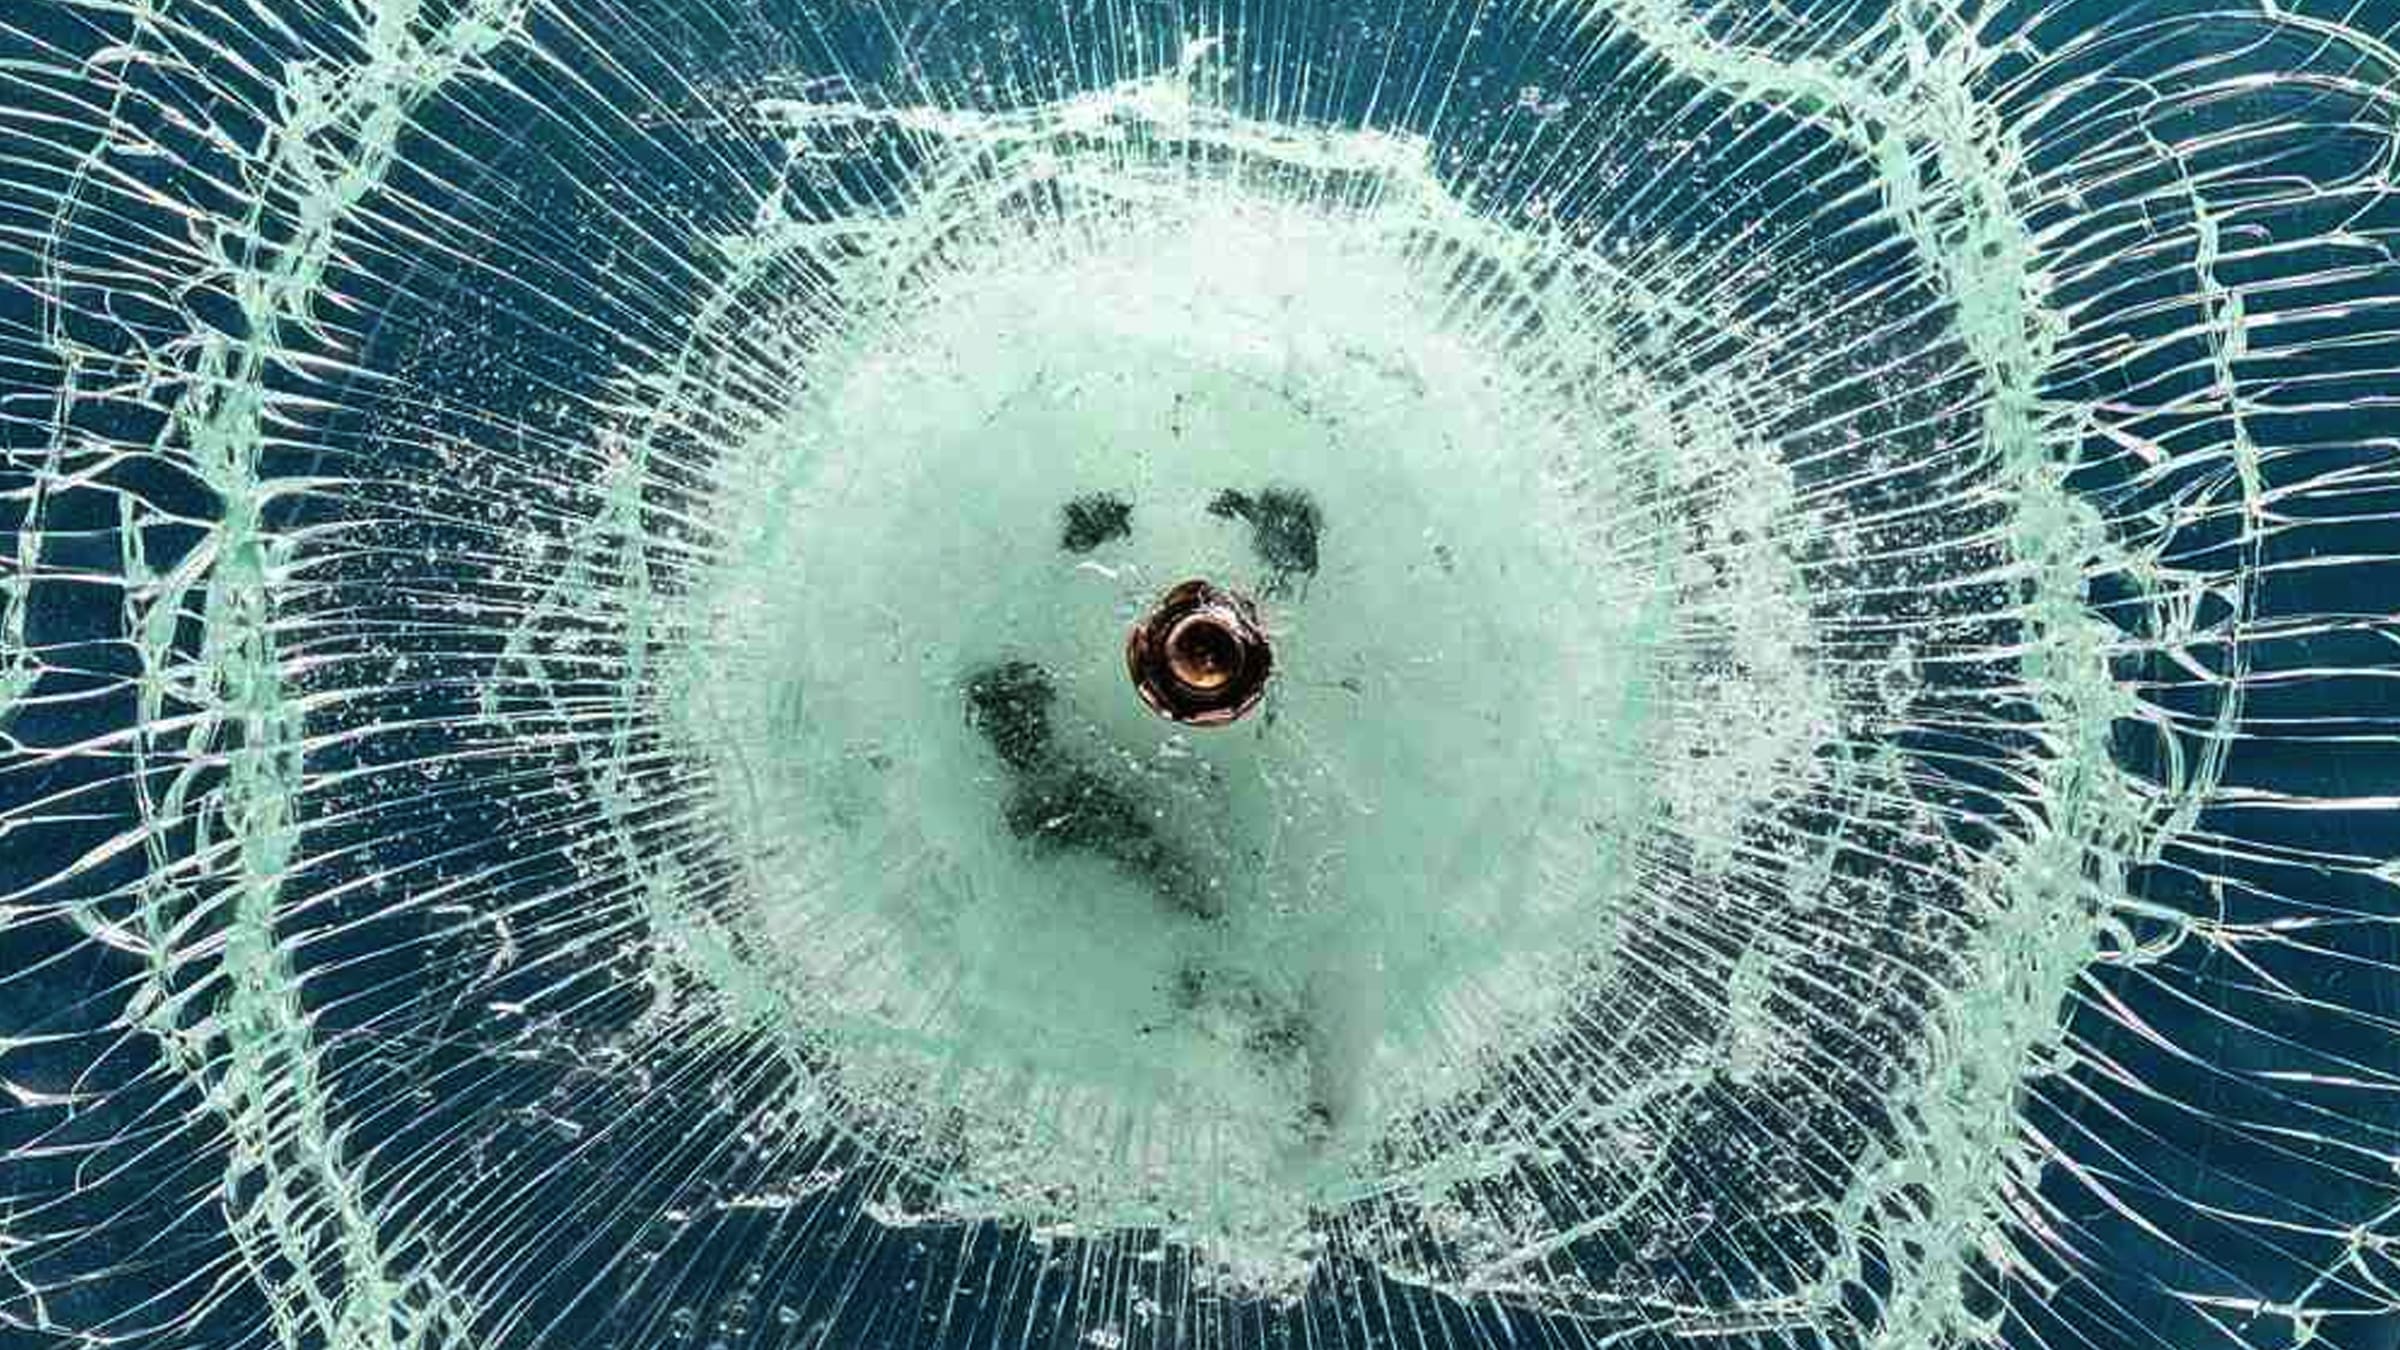 What Can Break Bulletproof Glass?